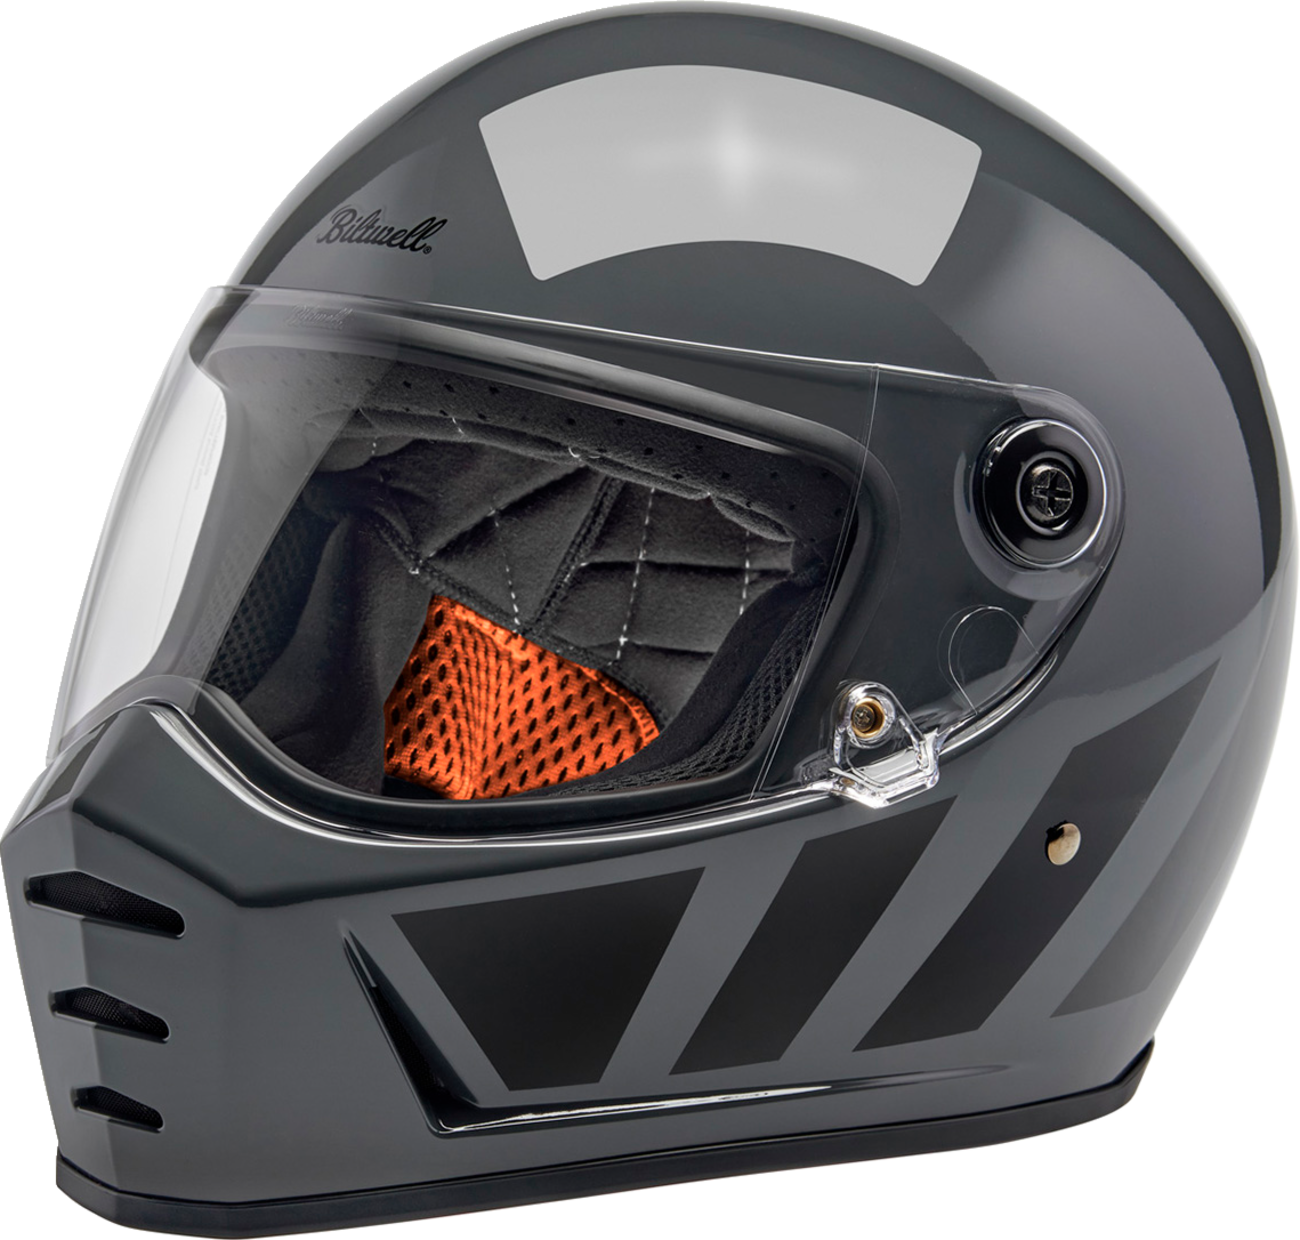 BILTWELL Lane Splitter Helmet - Storm Gray Inertia - XL 1004-569-505